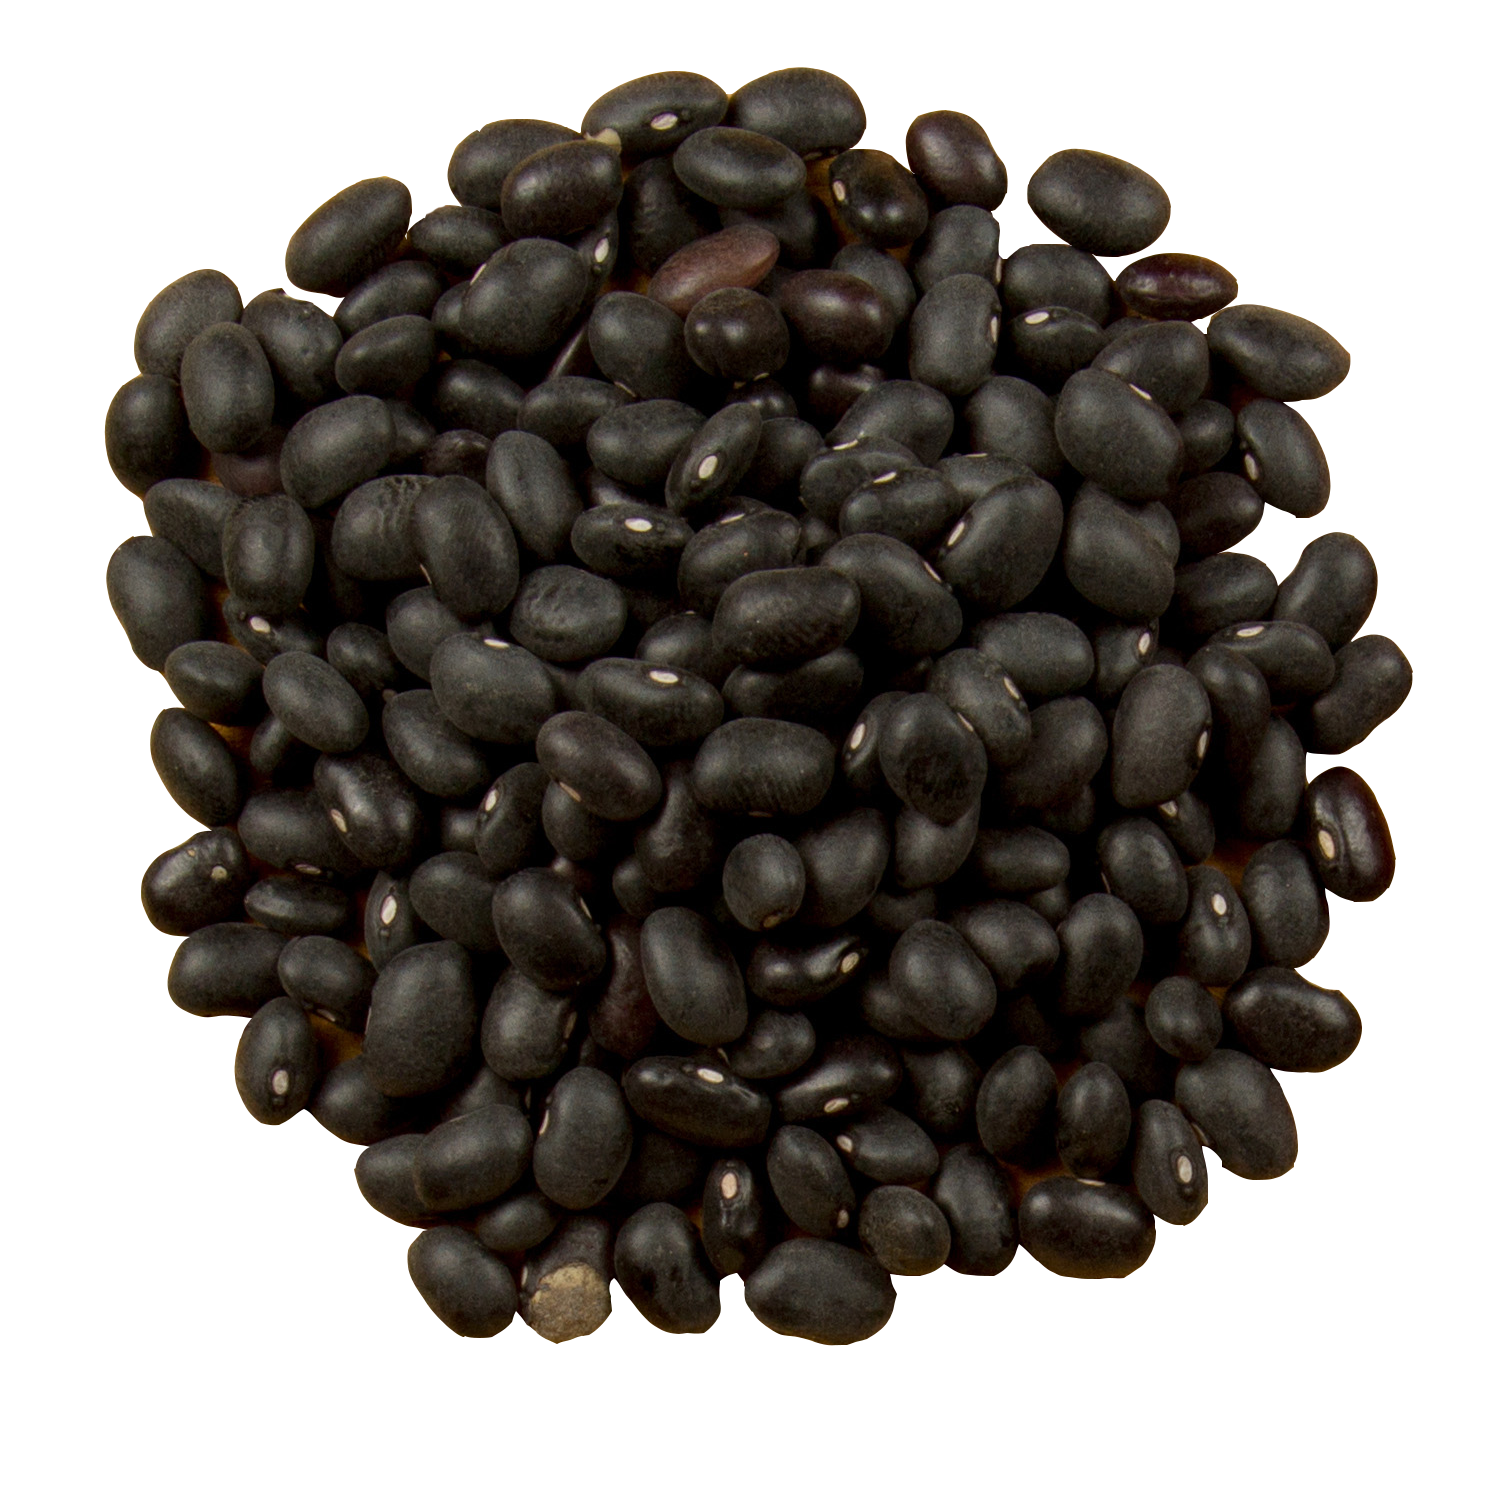 Dry Black Beans Transparent Image